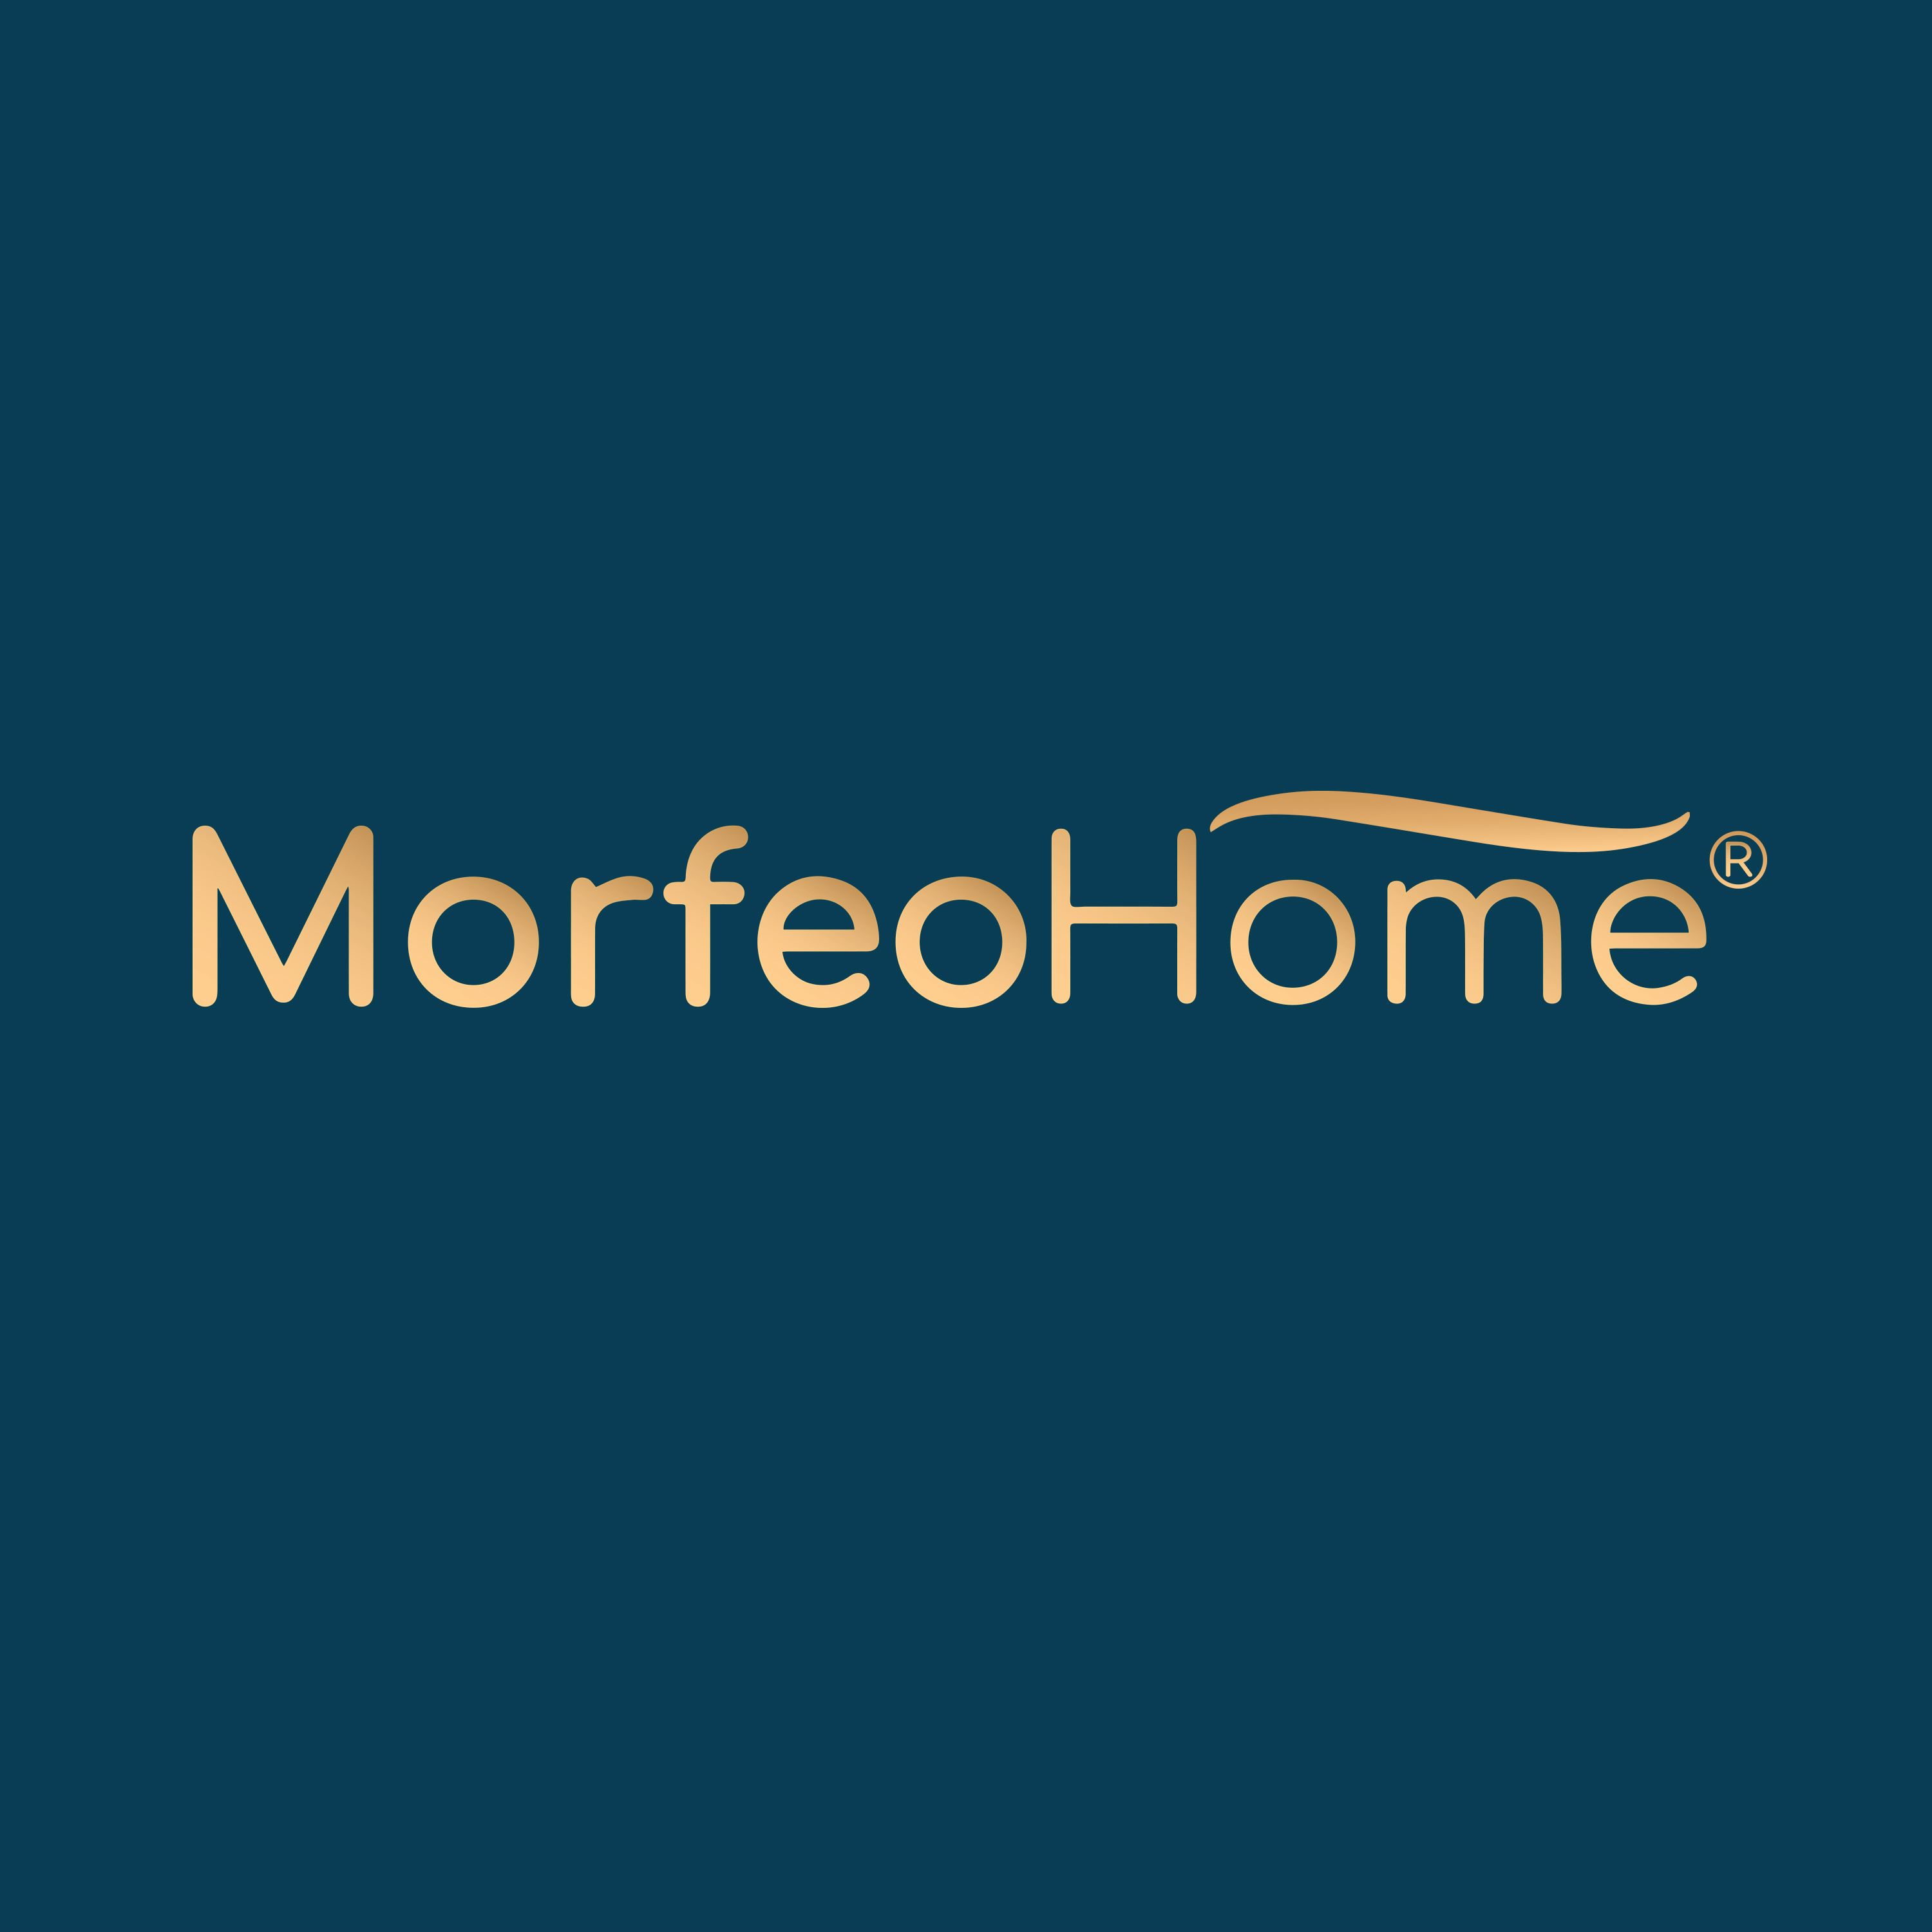 MorfeoHome